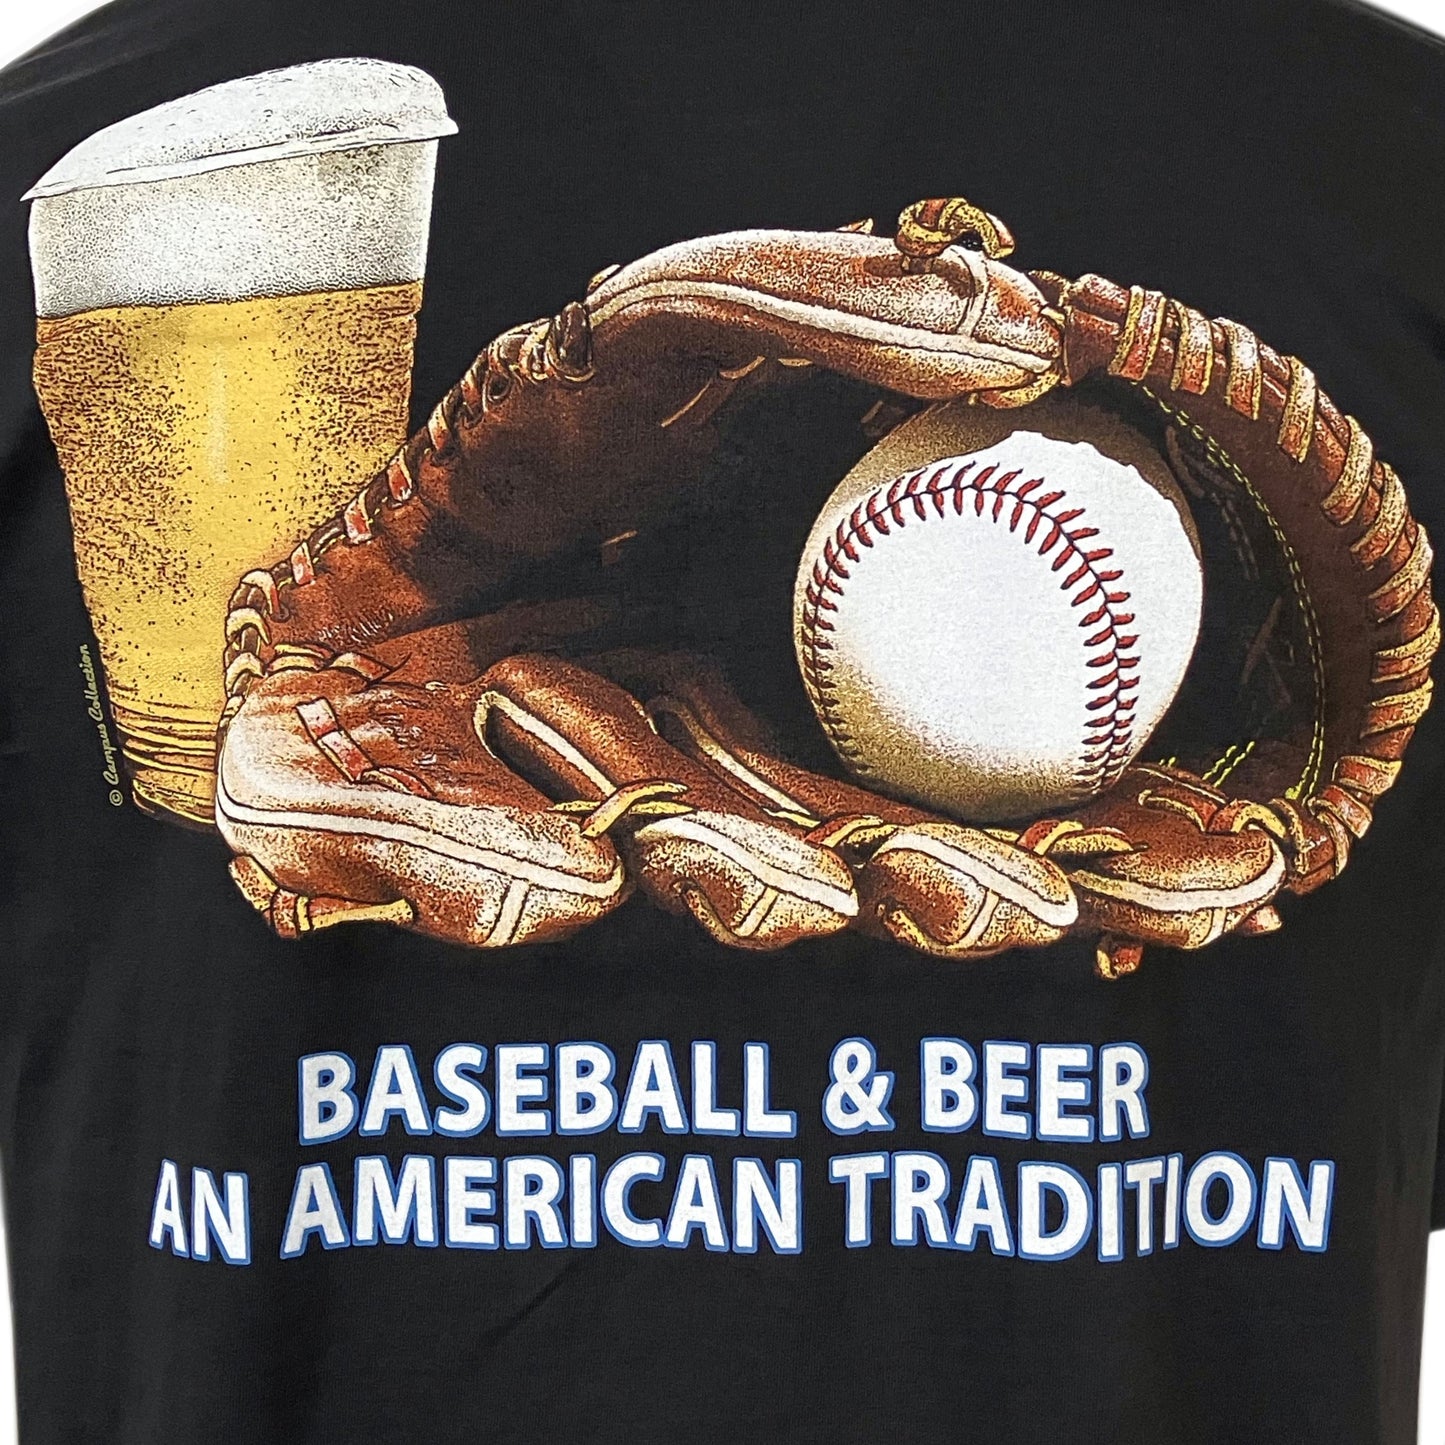 The Sandlot Brewery Beer and Baseball Tee